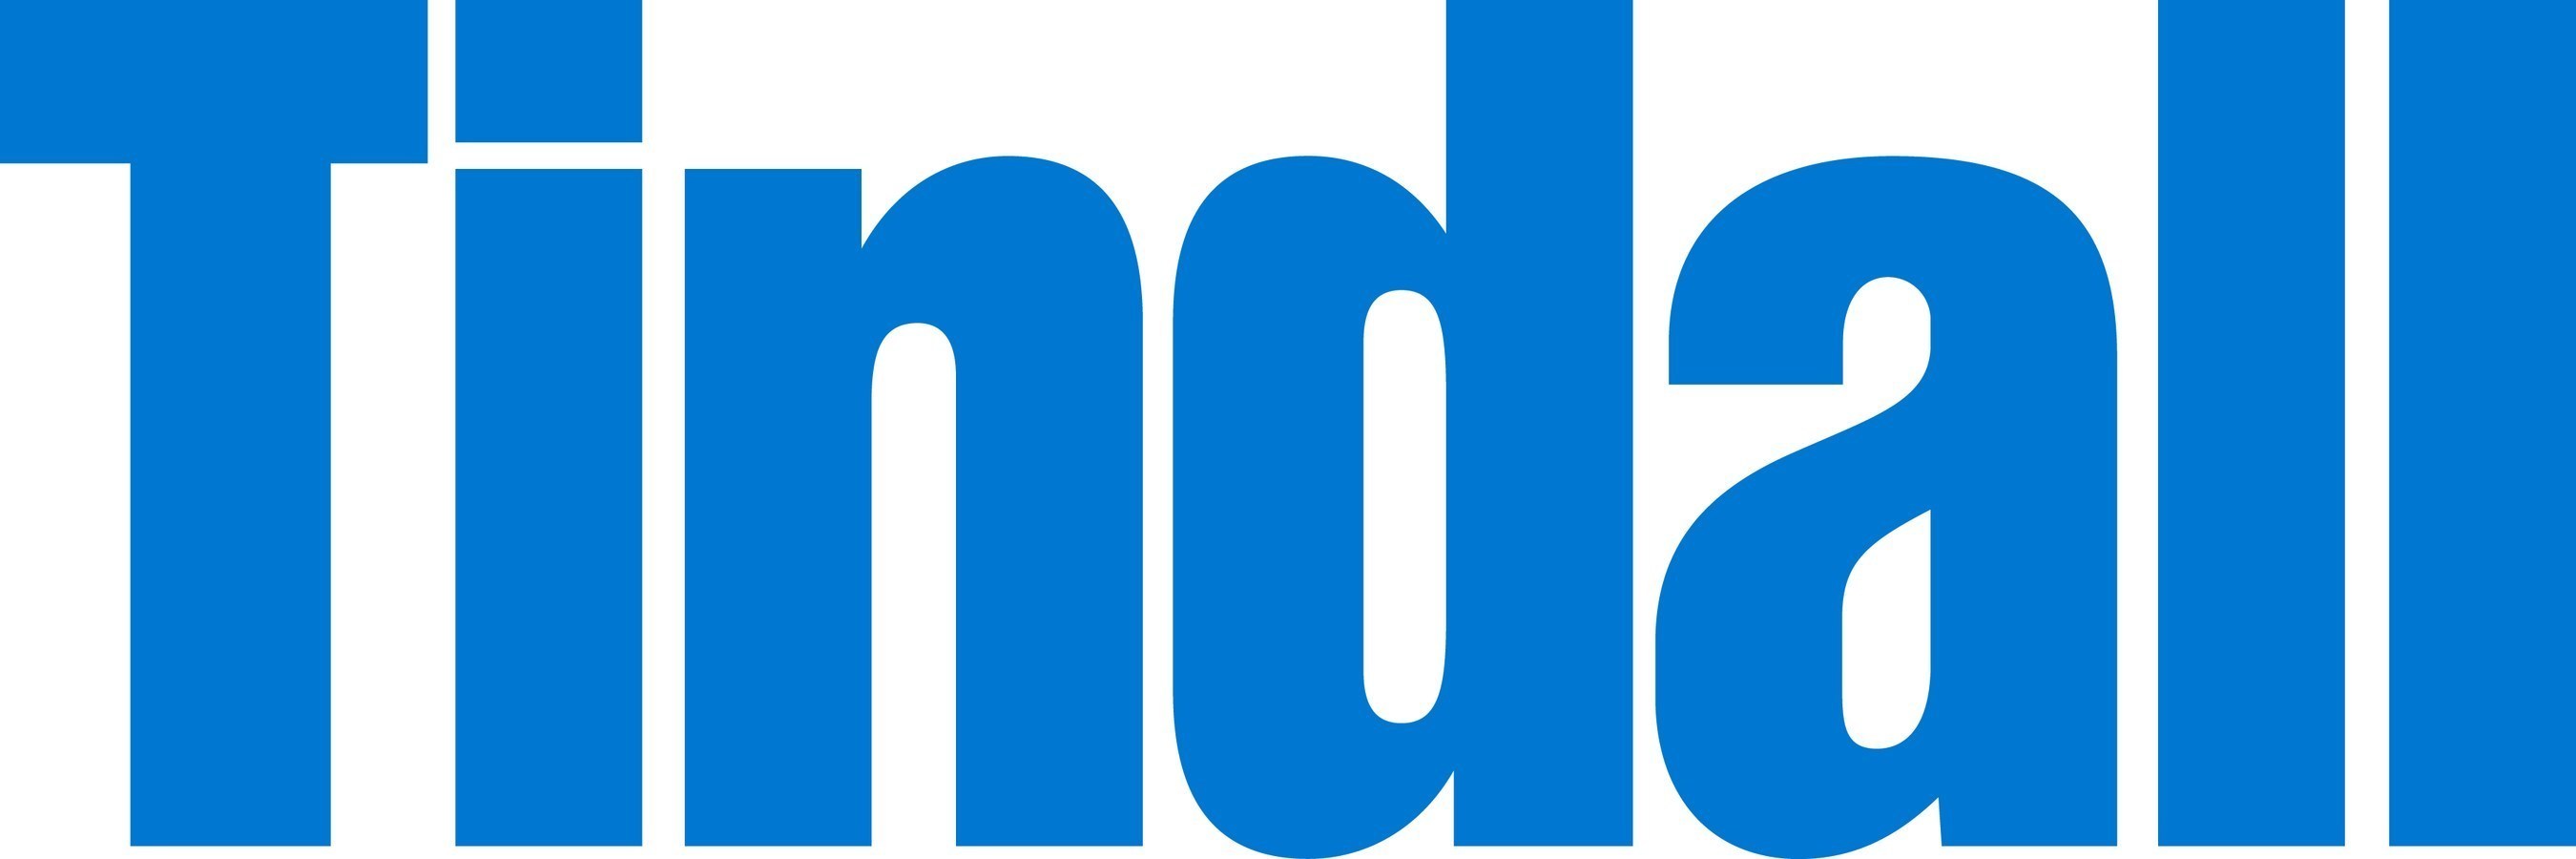 Tindall Corporation logo